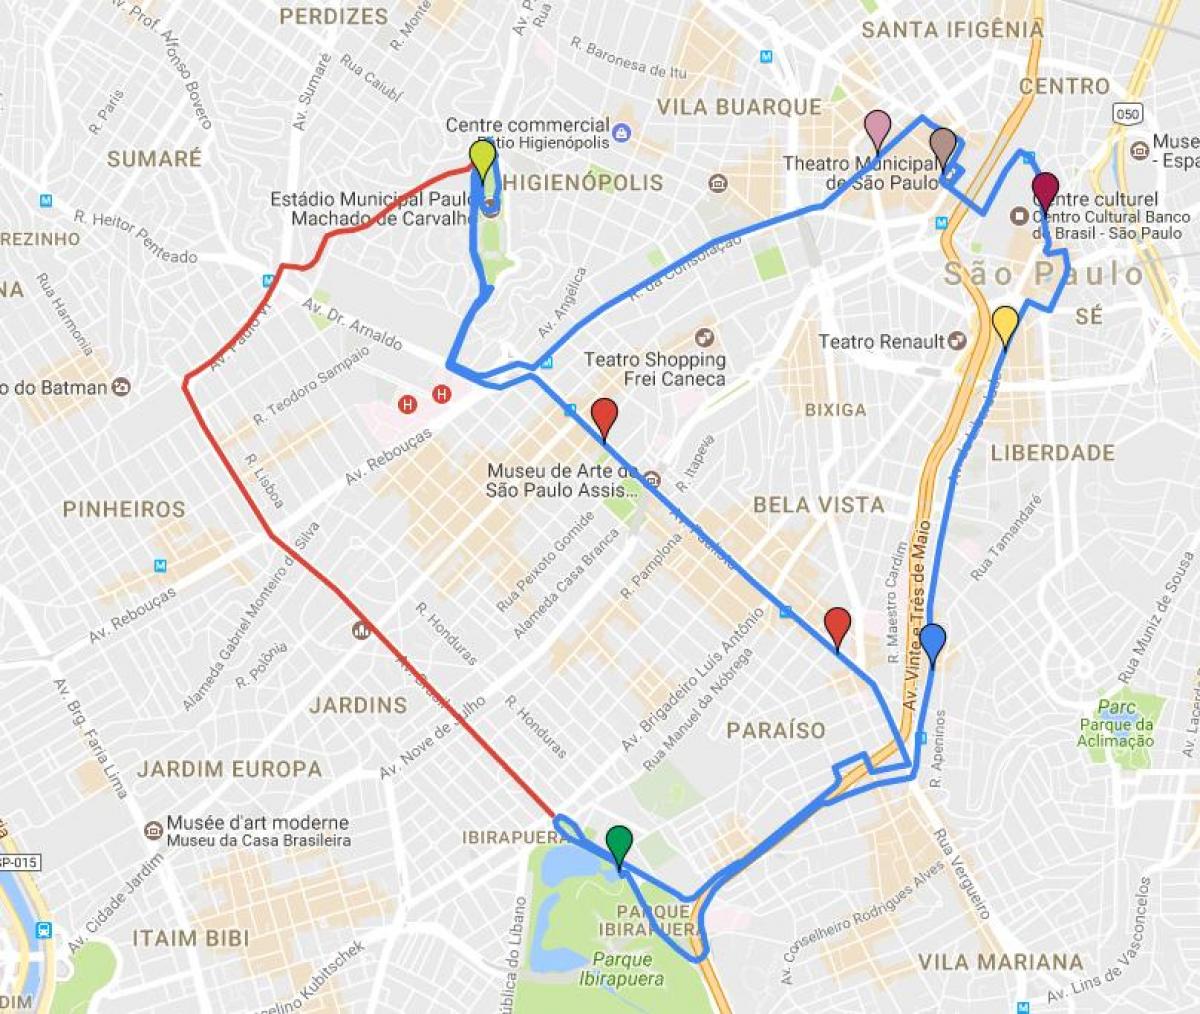 Karte von kreisförmigen turismo São Paulo - Linien